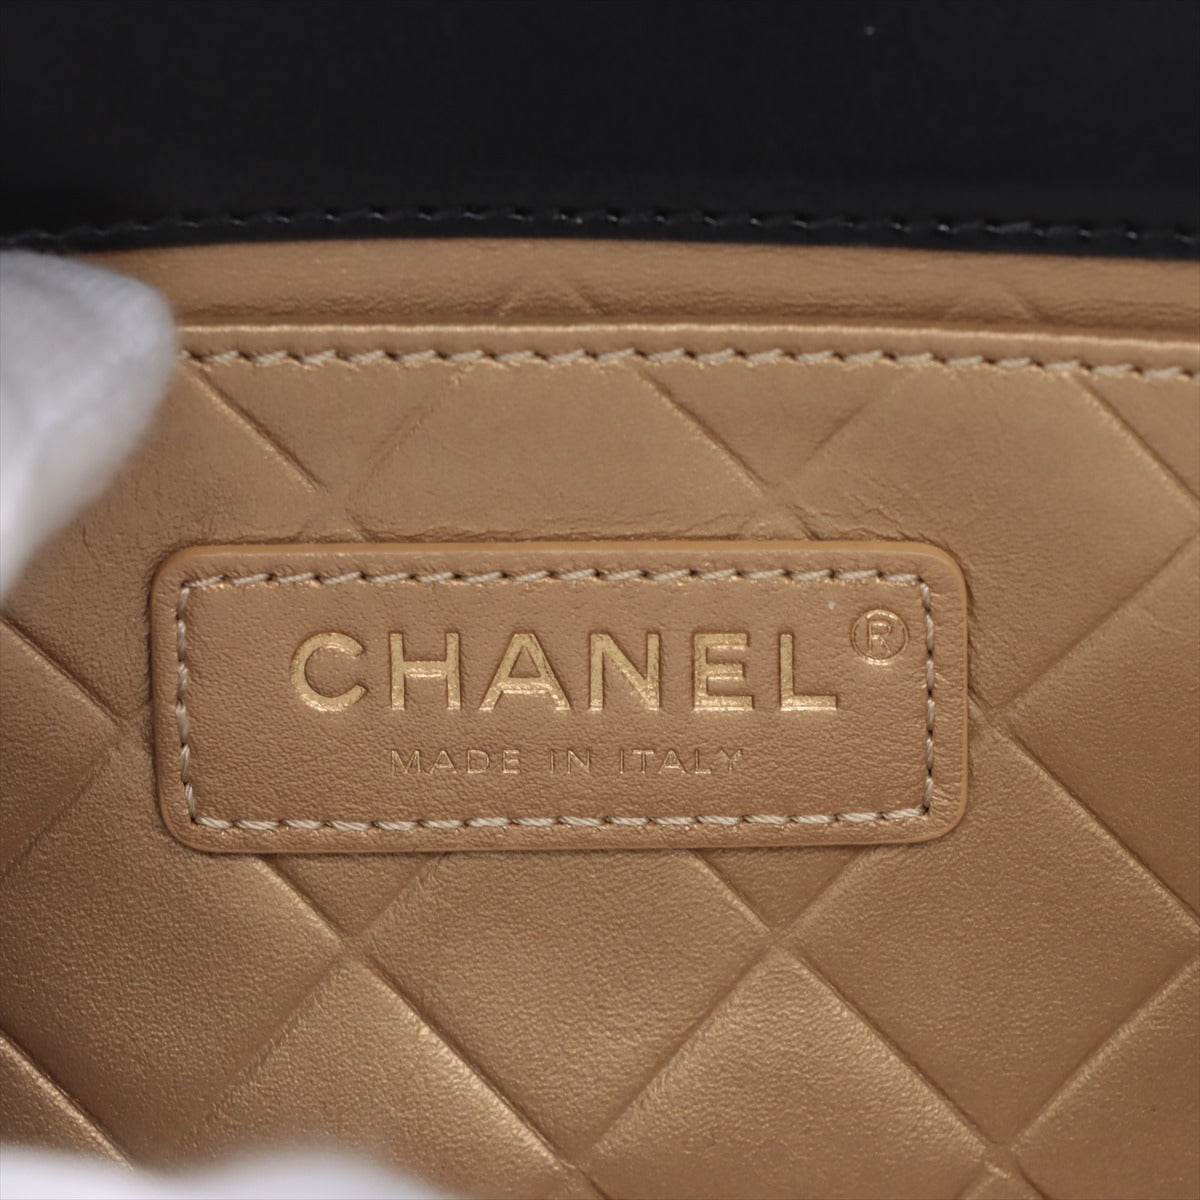 Chanel Mini Matrasse in Chain Shoulder Bag Black G